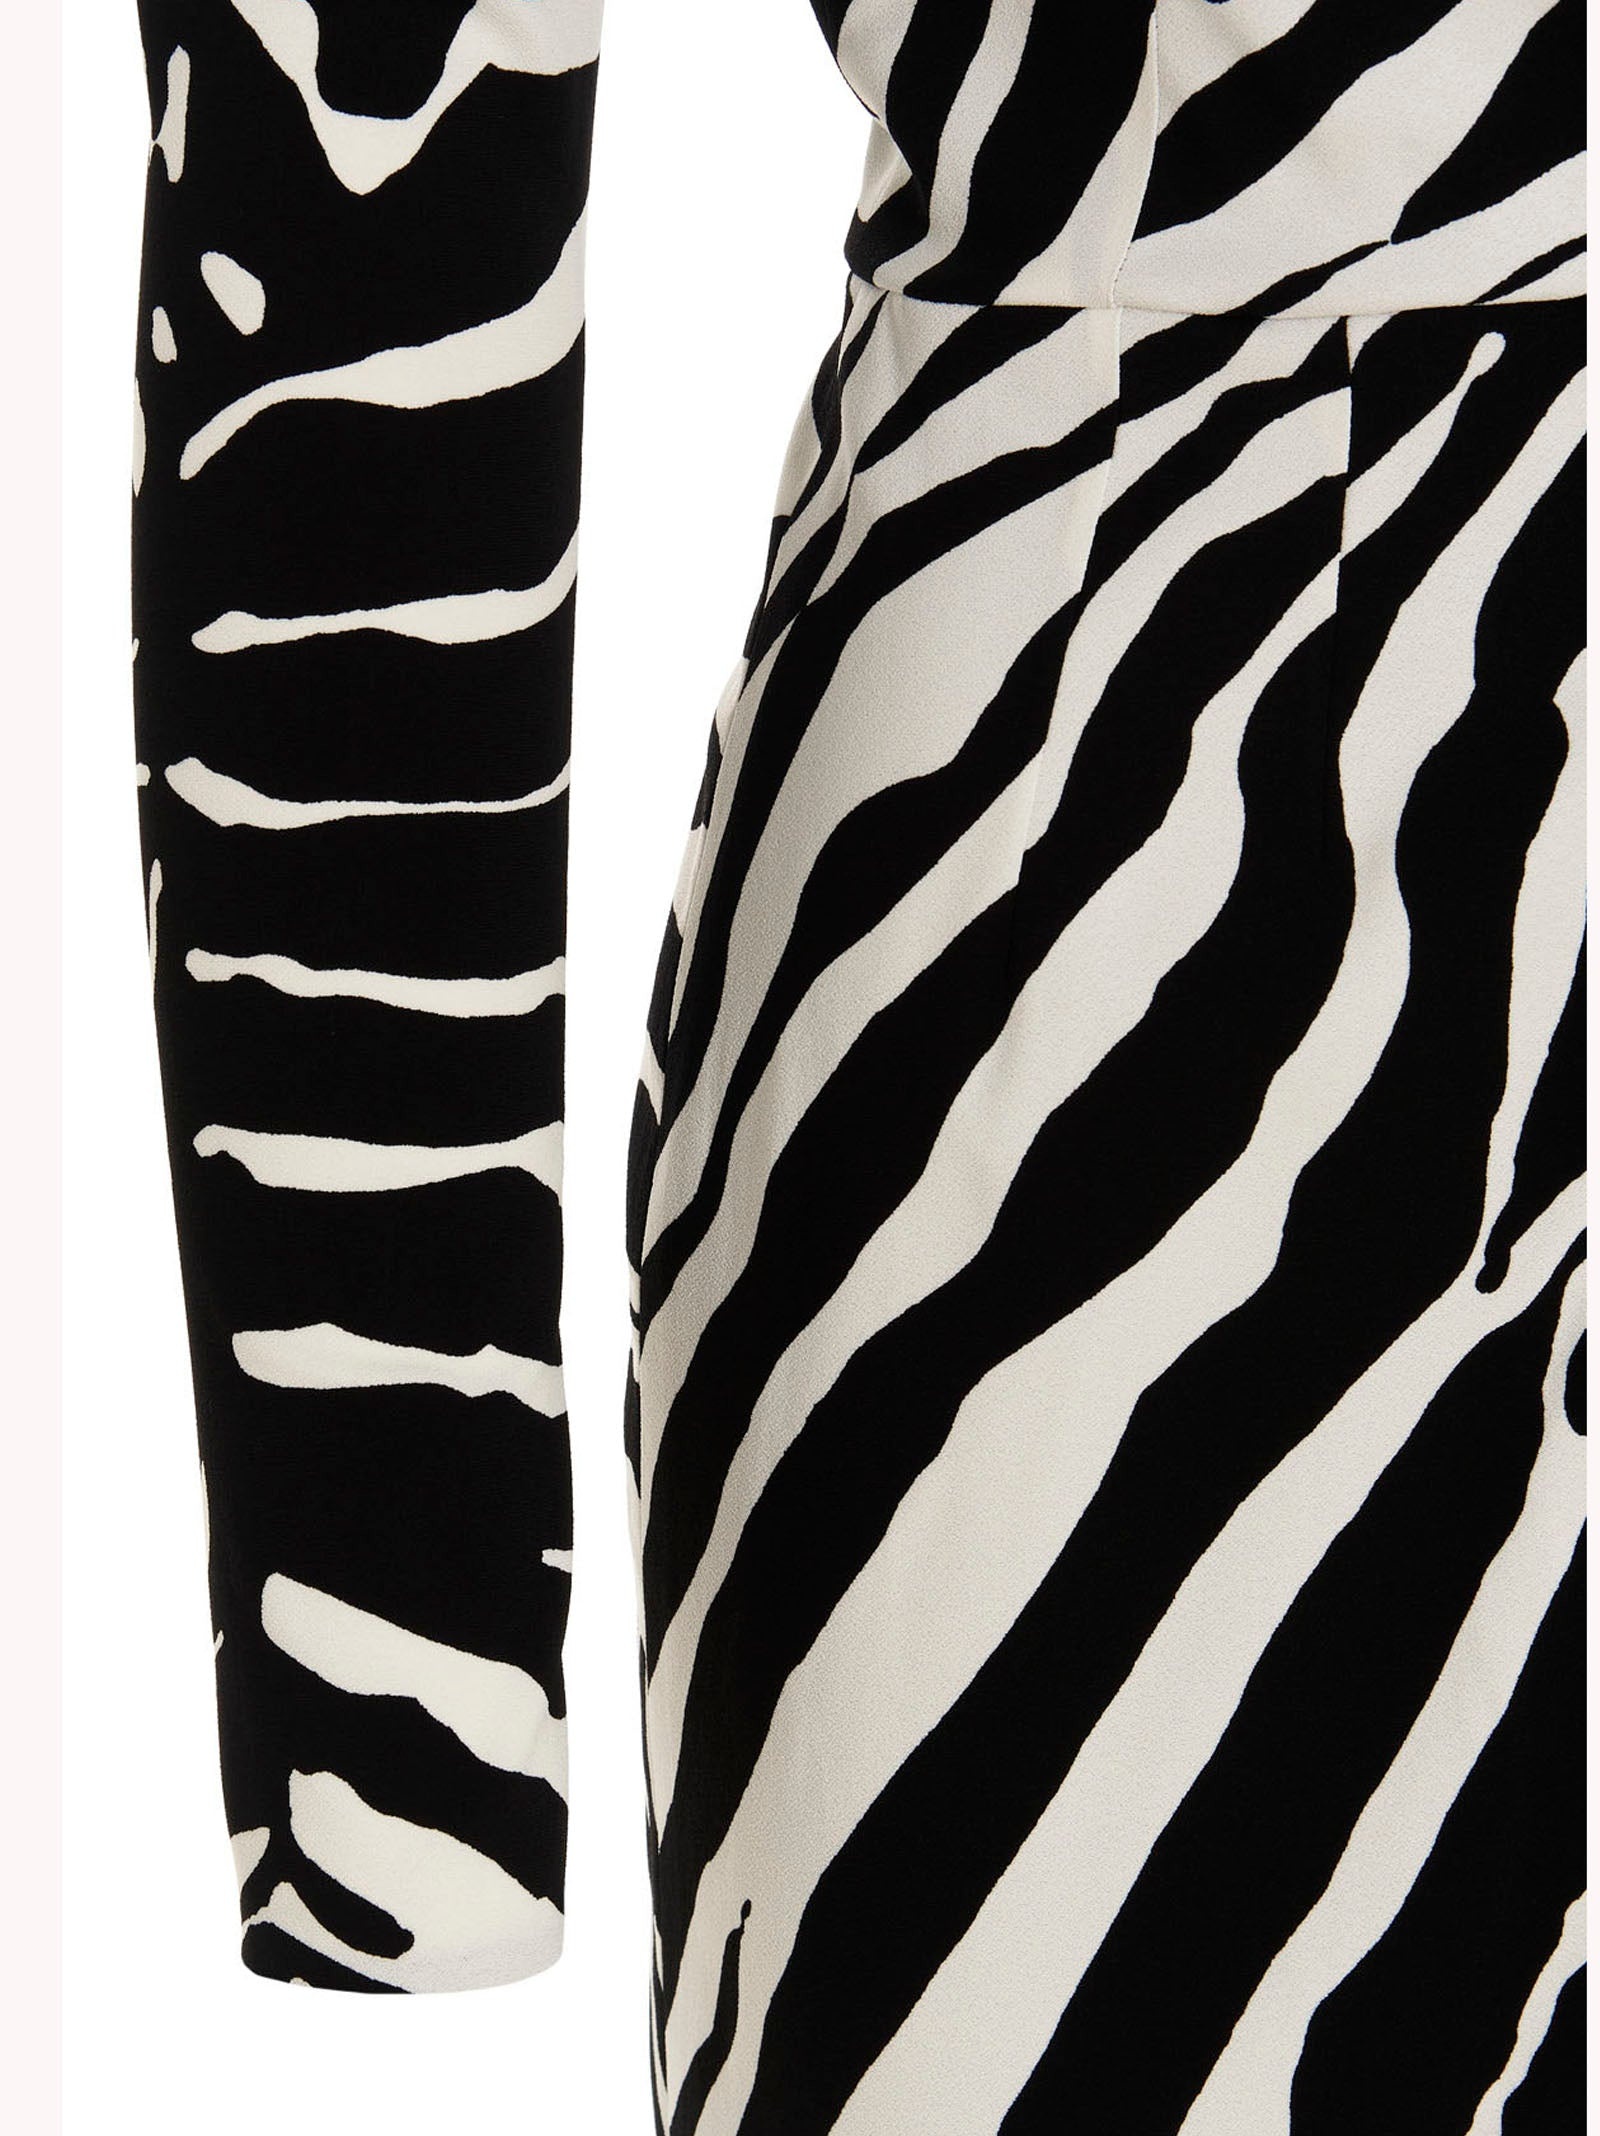 Dolce & Gabbana ‘Zebra’ Dress - 4